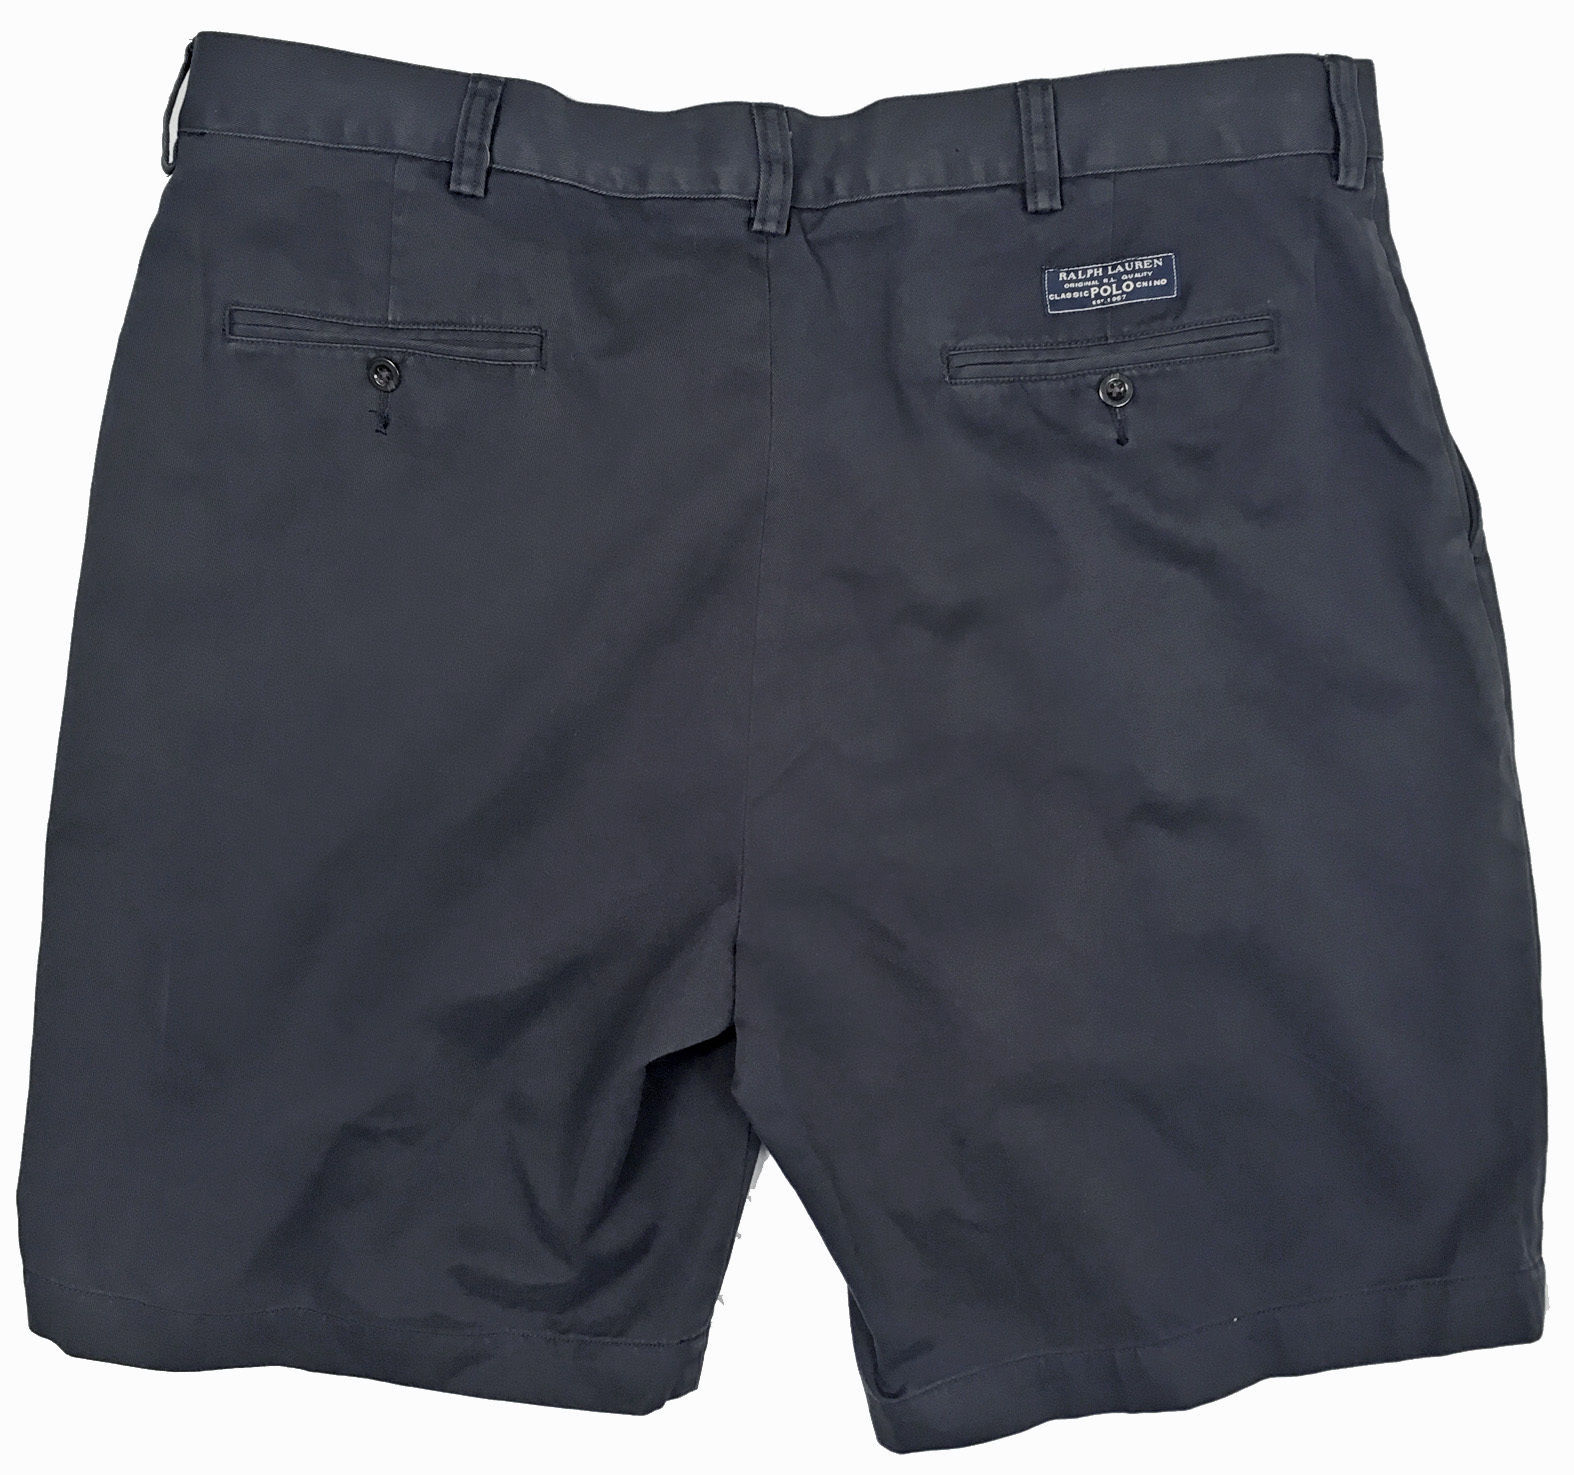 NEW! Polo Ralph Lauren Prospect Shorts! Flat and 50 similar items